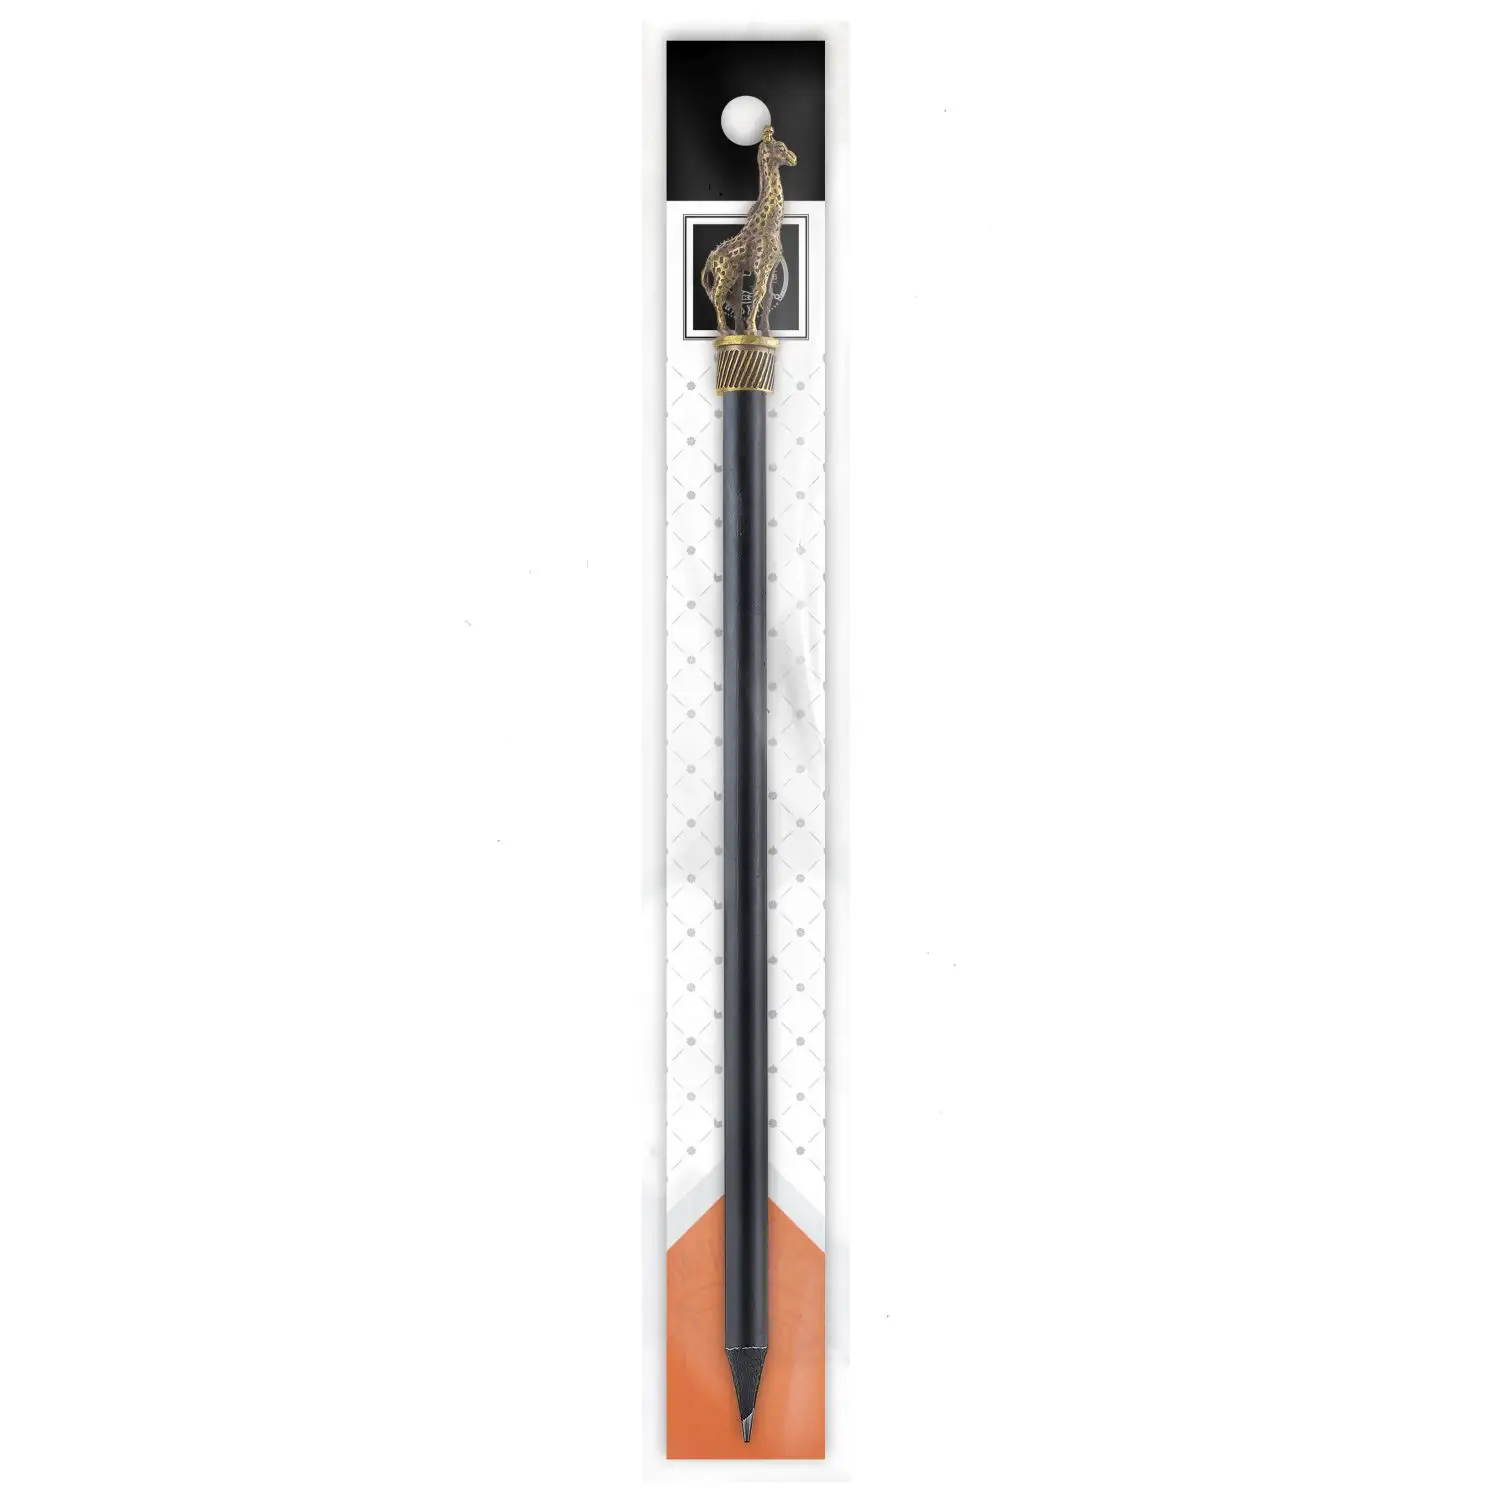 Карандаш Сафари-Жираф латунный с чернением карандаш с литым элементом сафари зебра латунный в футляре